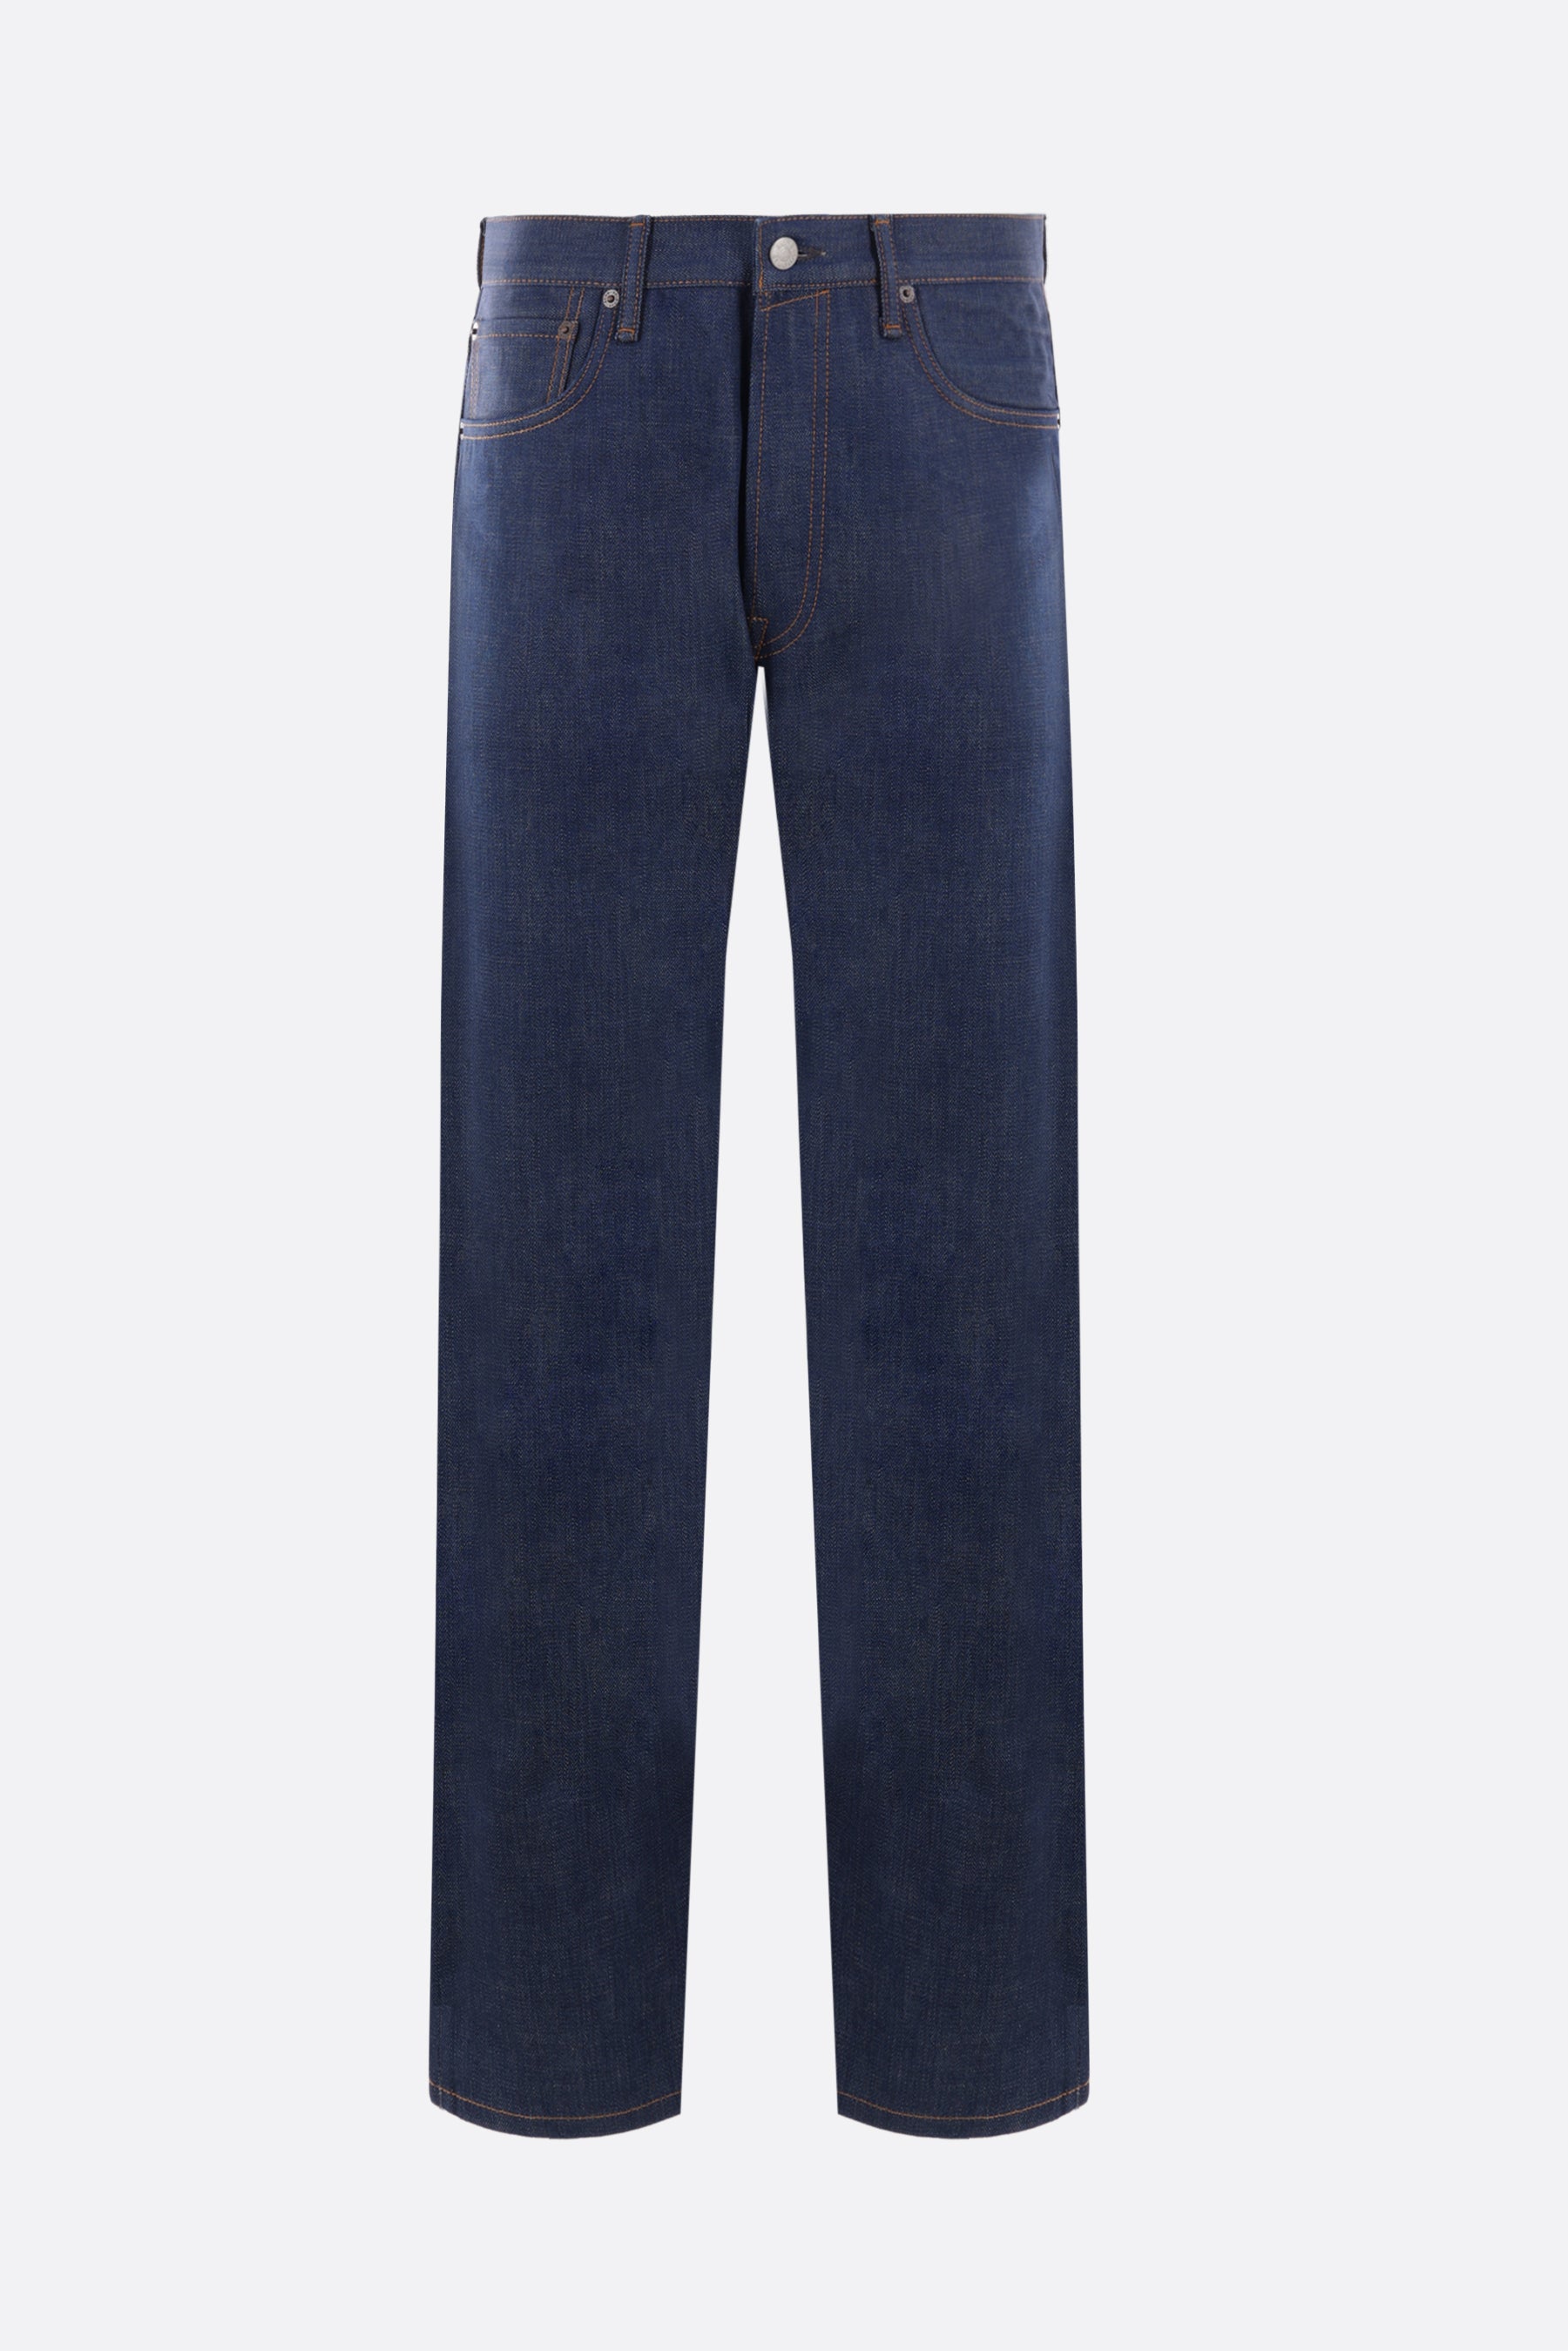 1996 regular-fit denim jeans